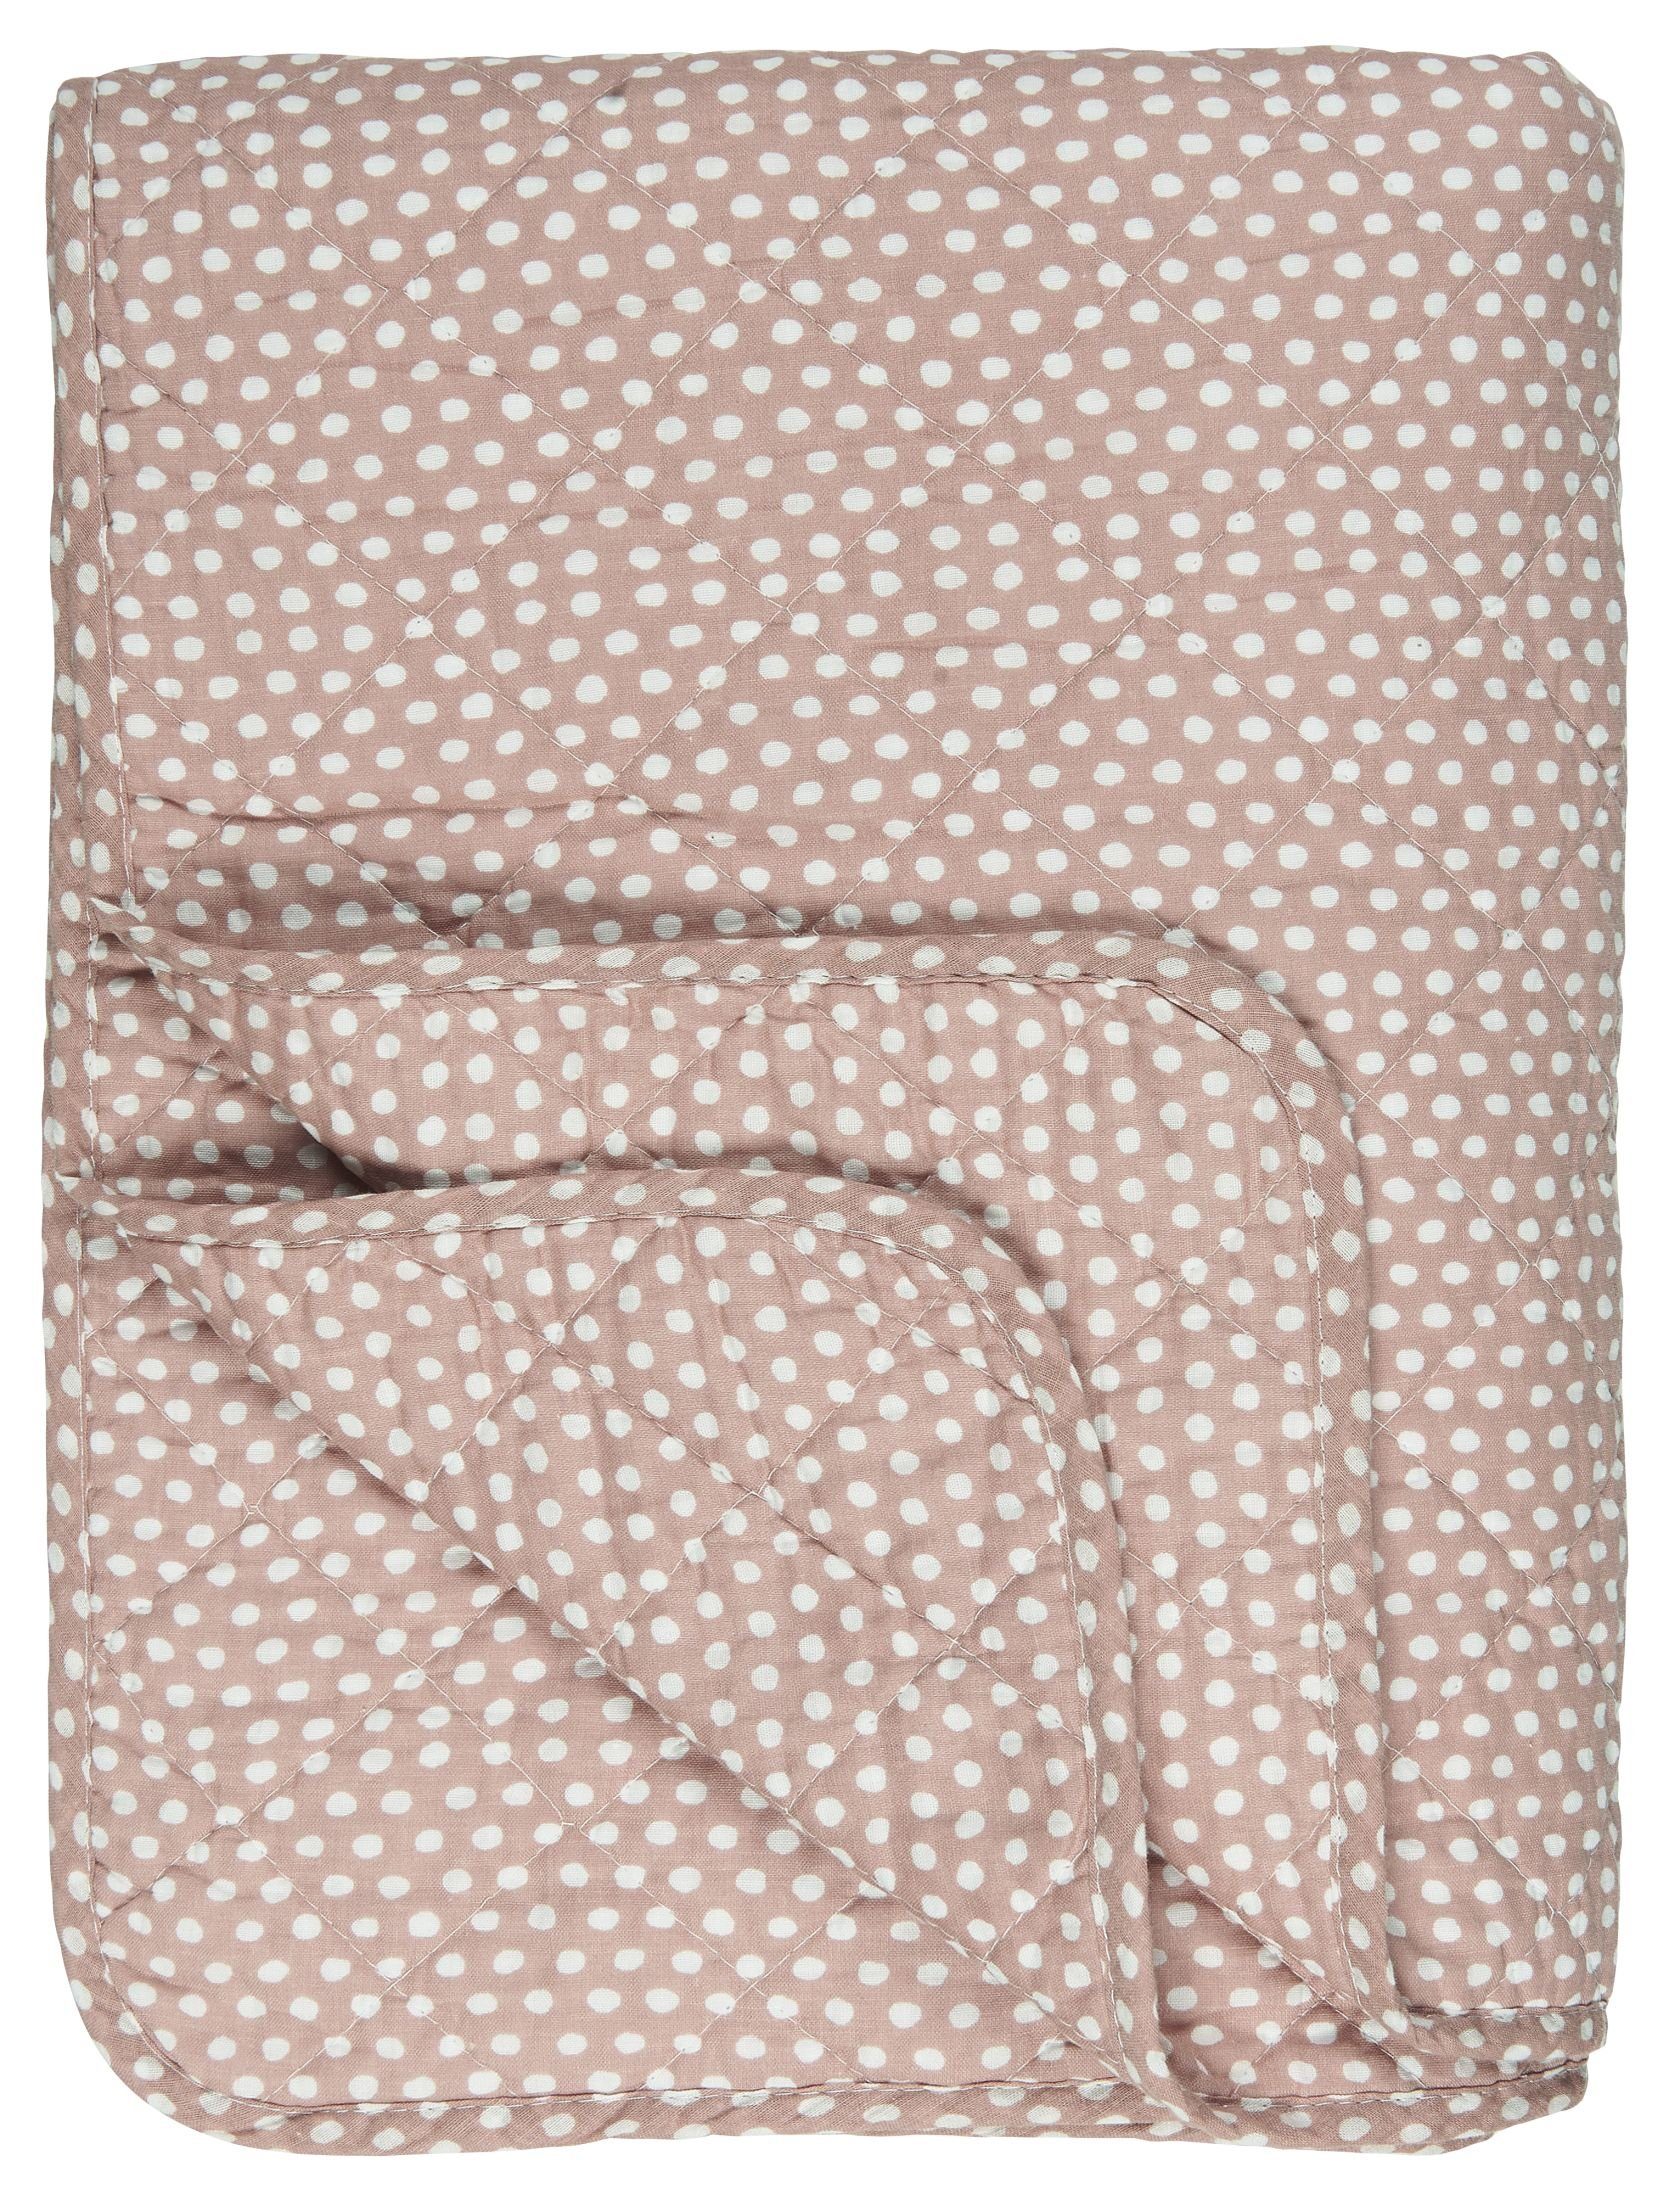 Wohndecke Decke Quilt Tagesdecke Überwurf Punkte Rosa Weiß 180x130cm Ib Laursen, Ib Laursen